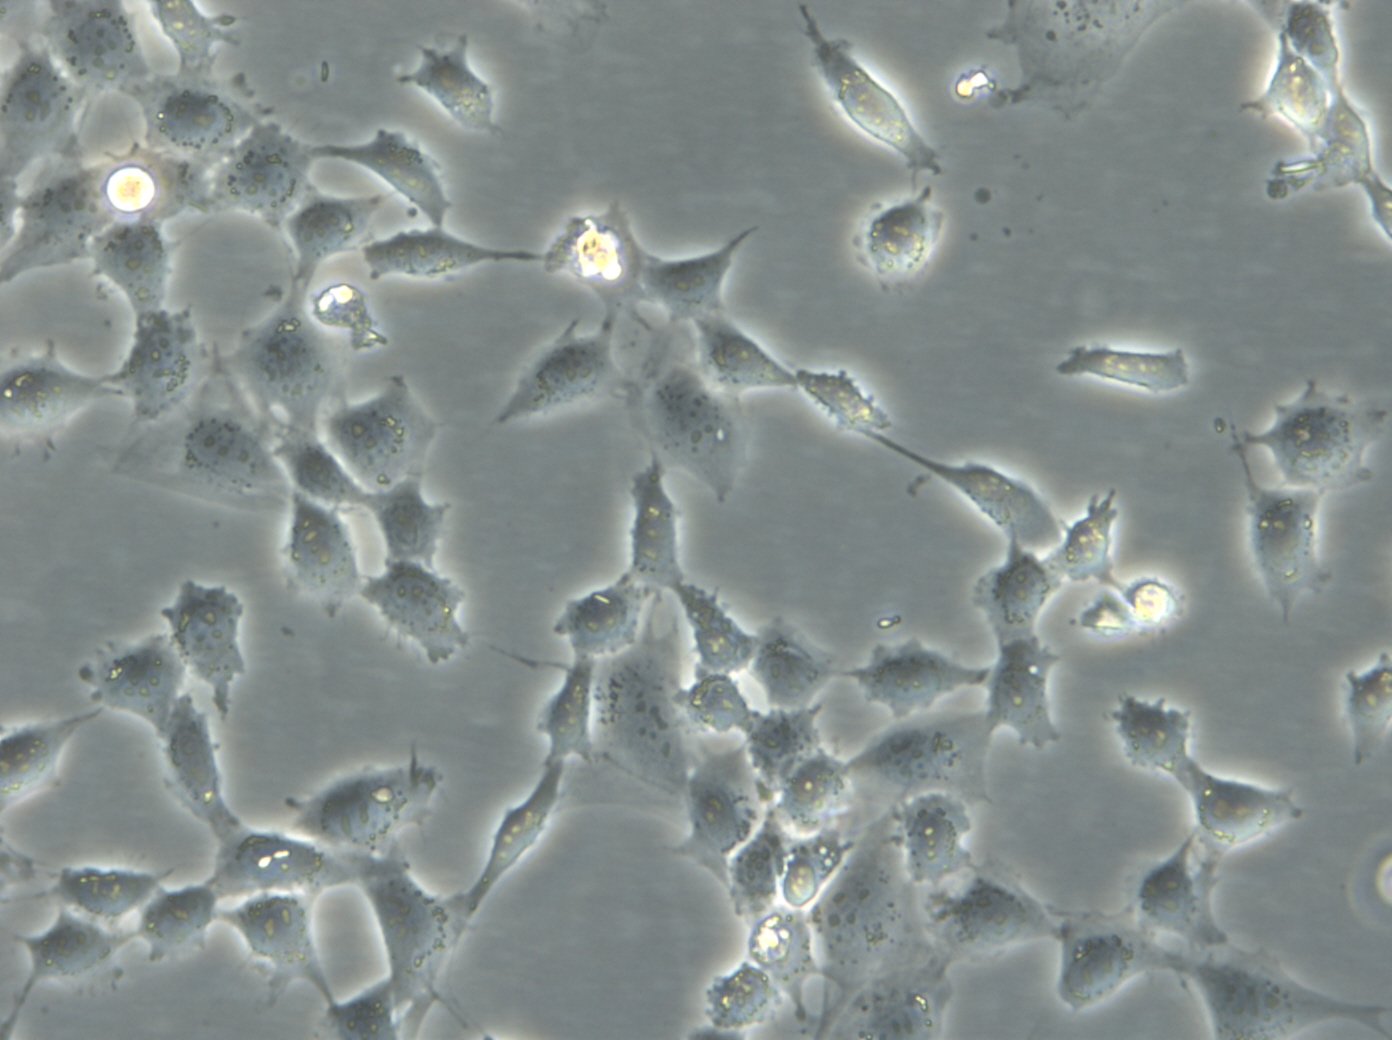 3T6-Swiss albino Cells